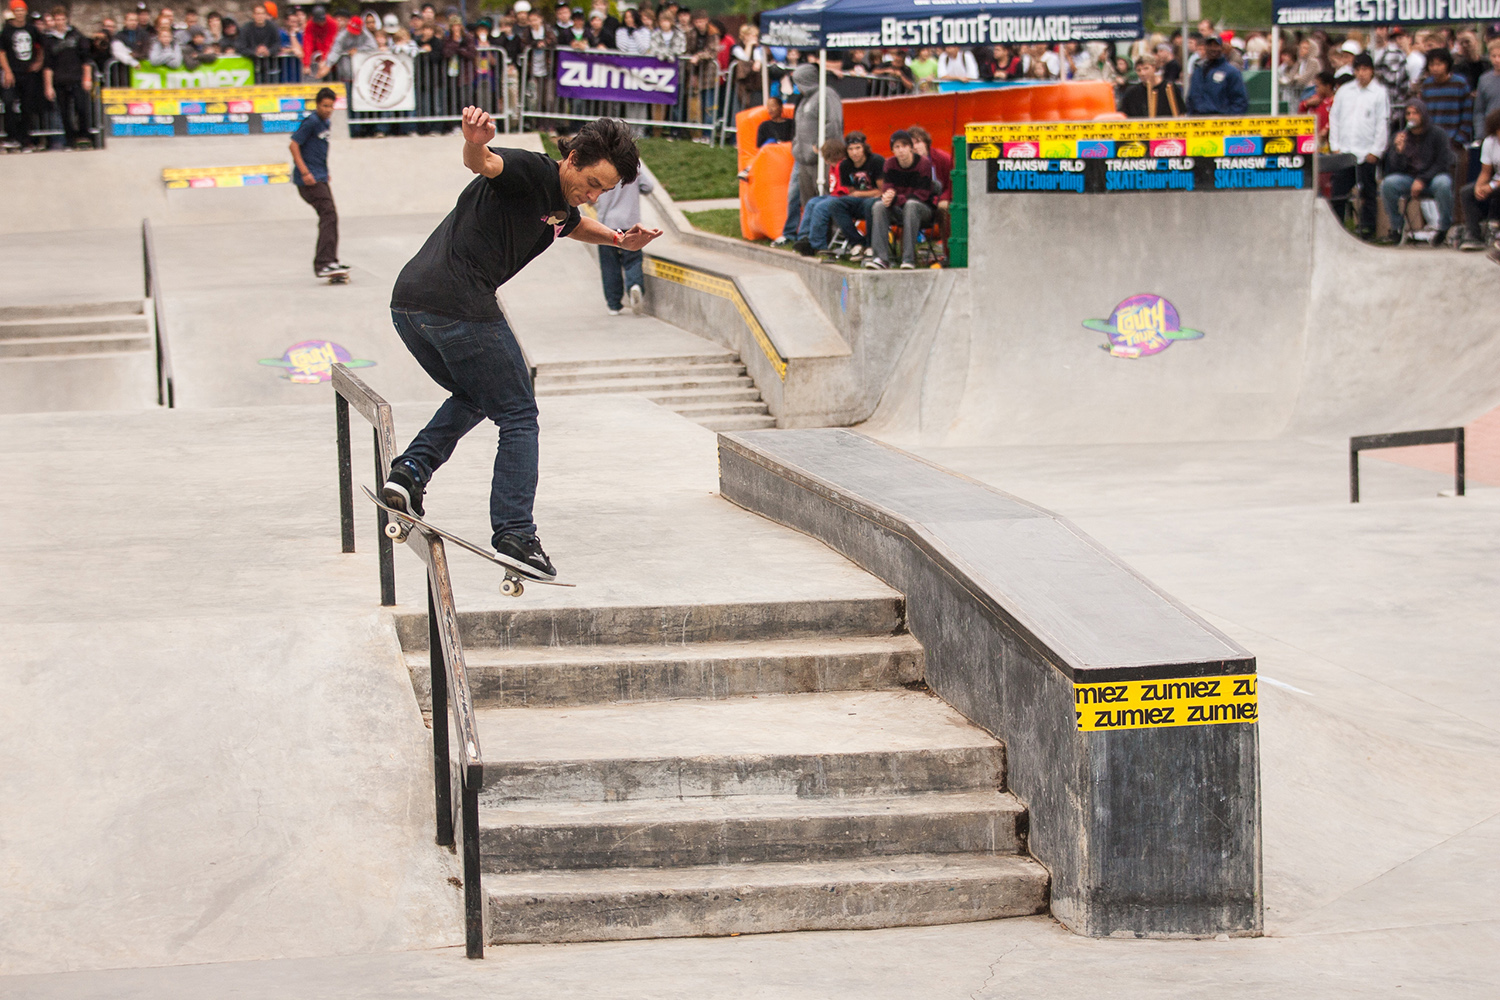  Pro skater Cairo Foster utilizes a rail during a publicized skate demo at the Glenhaven Skatepark. 